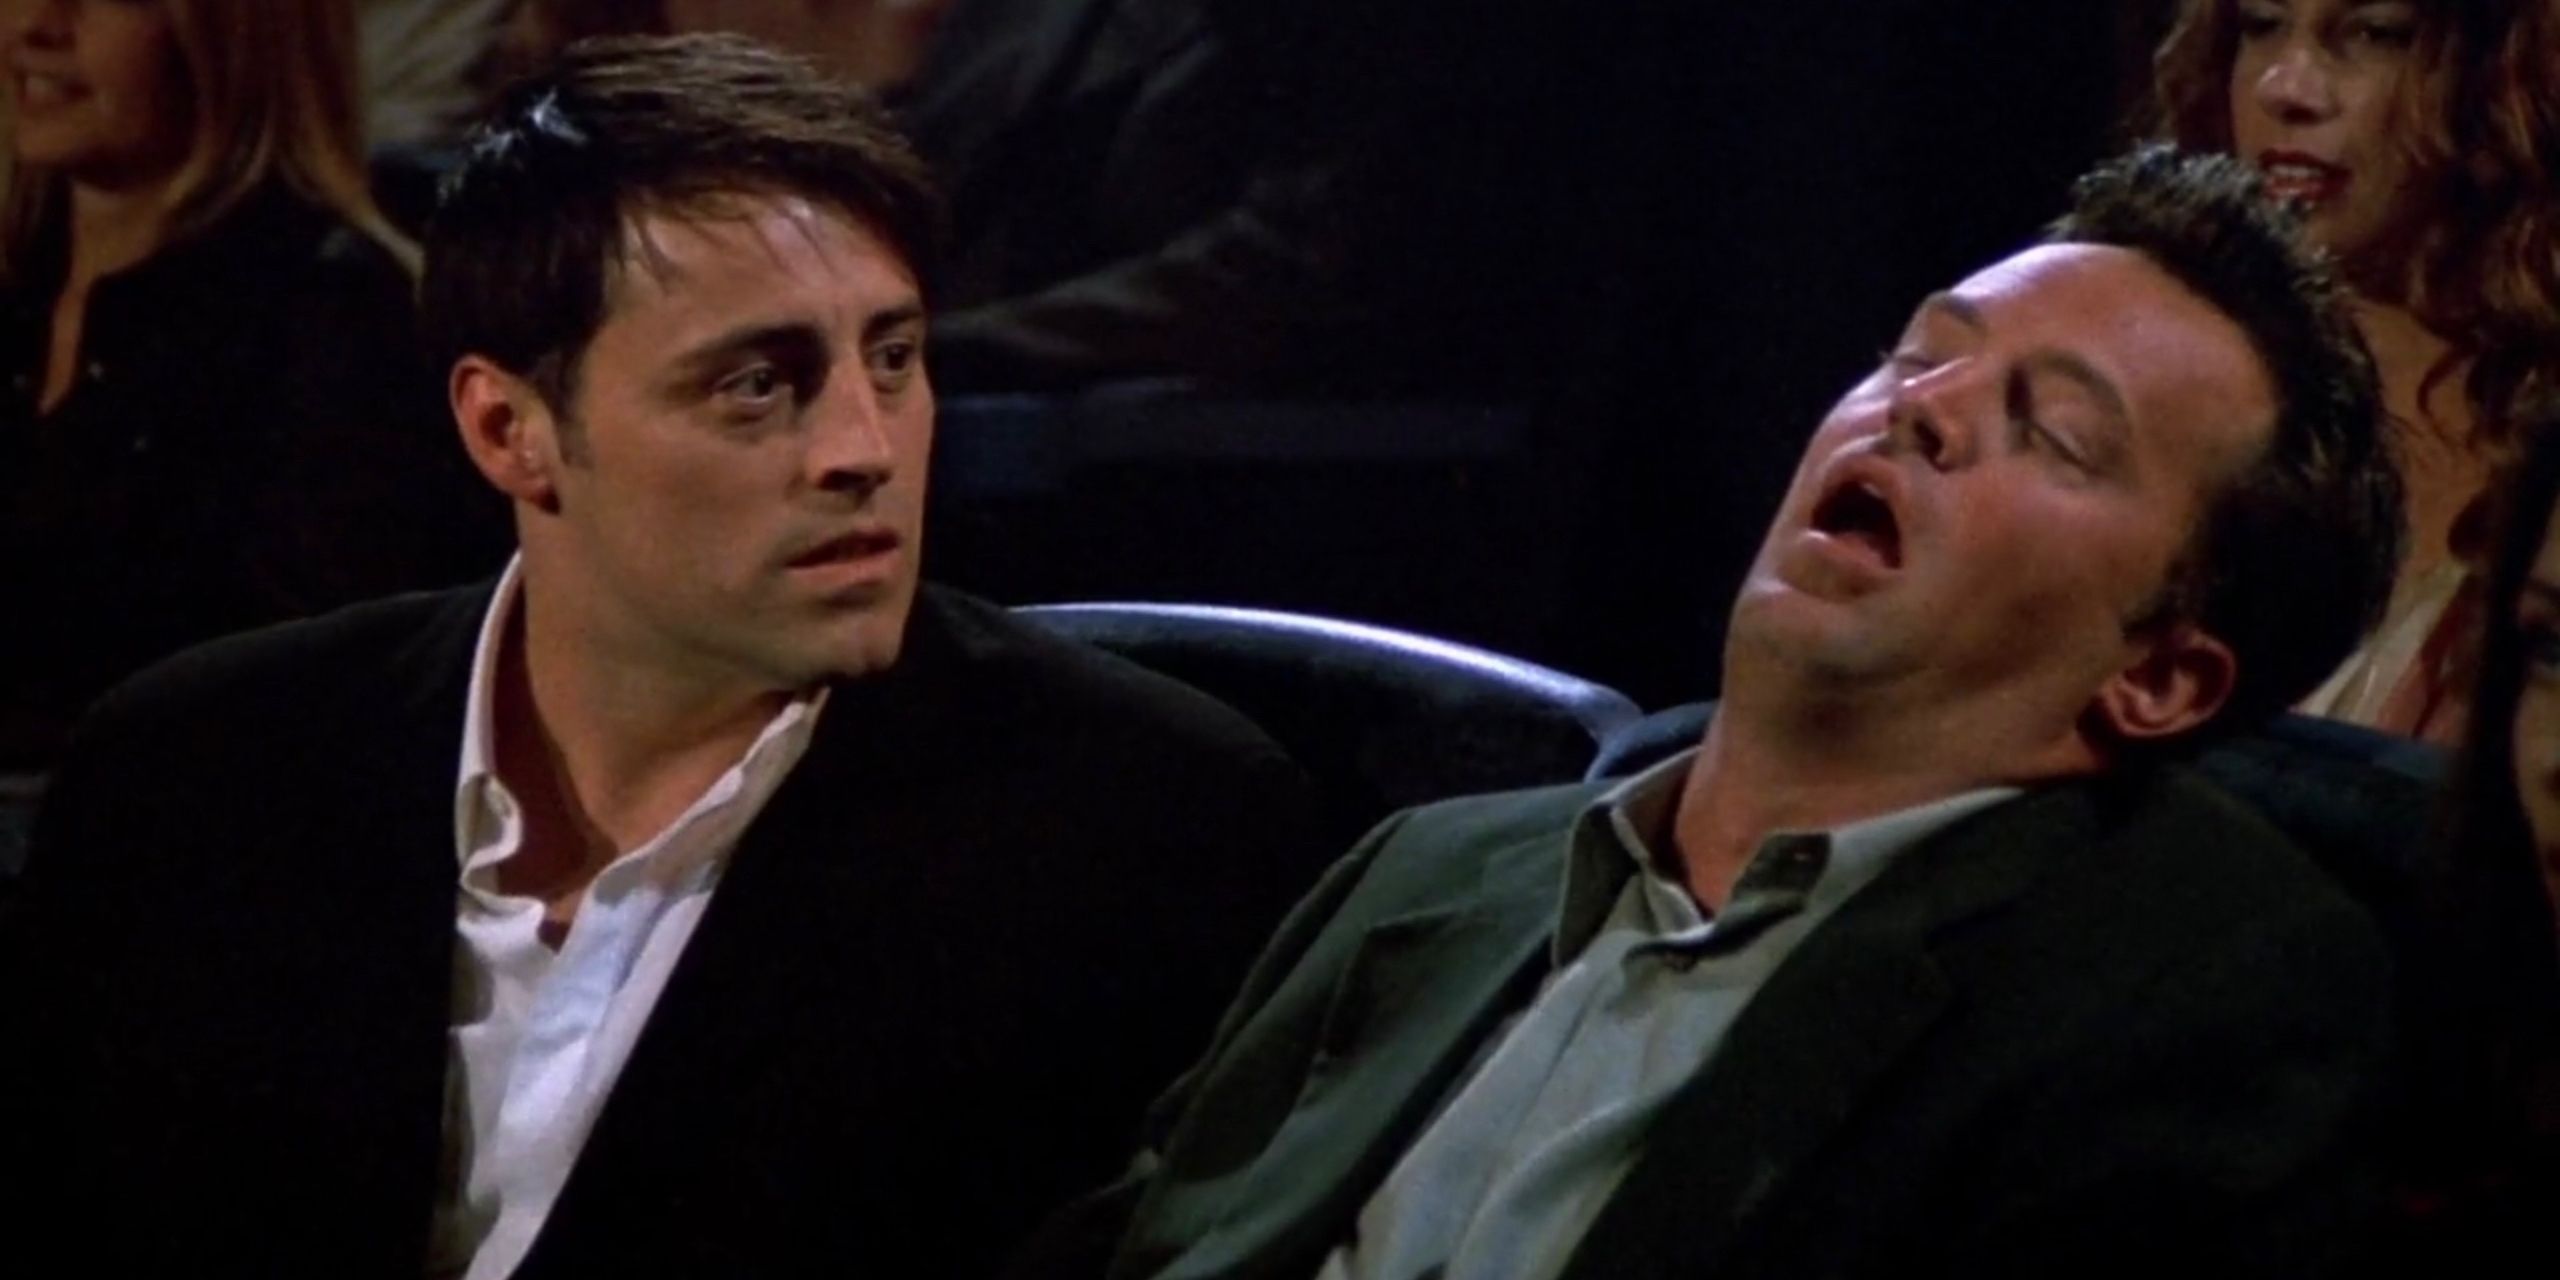 Chandler falls asleep during Joey's movie premiere in Friends.